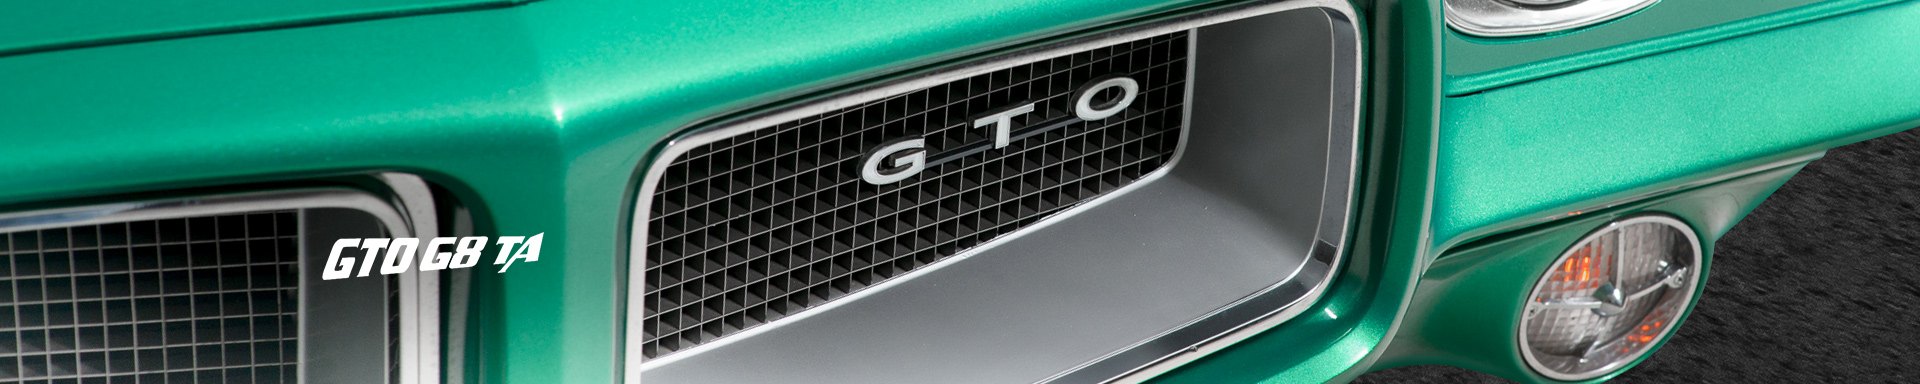 GTOG8TA Wheel Center Caps